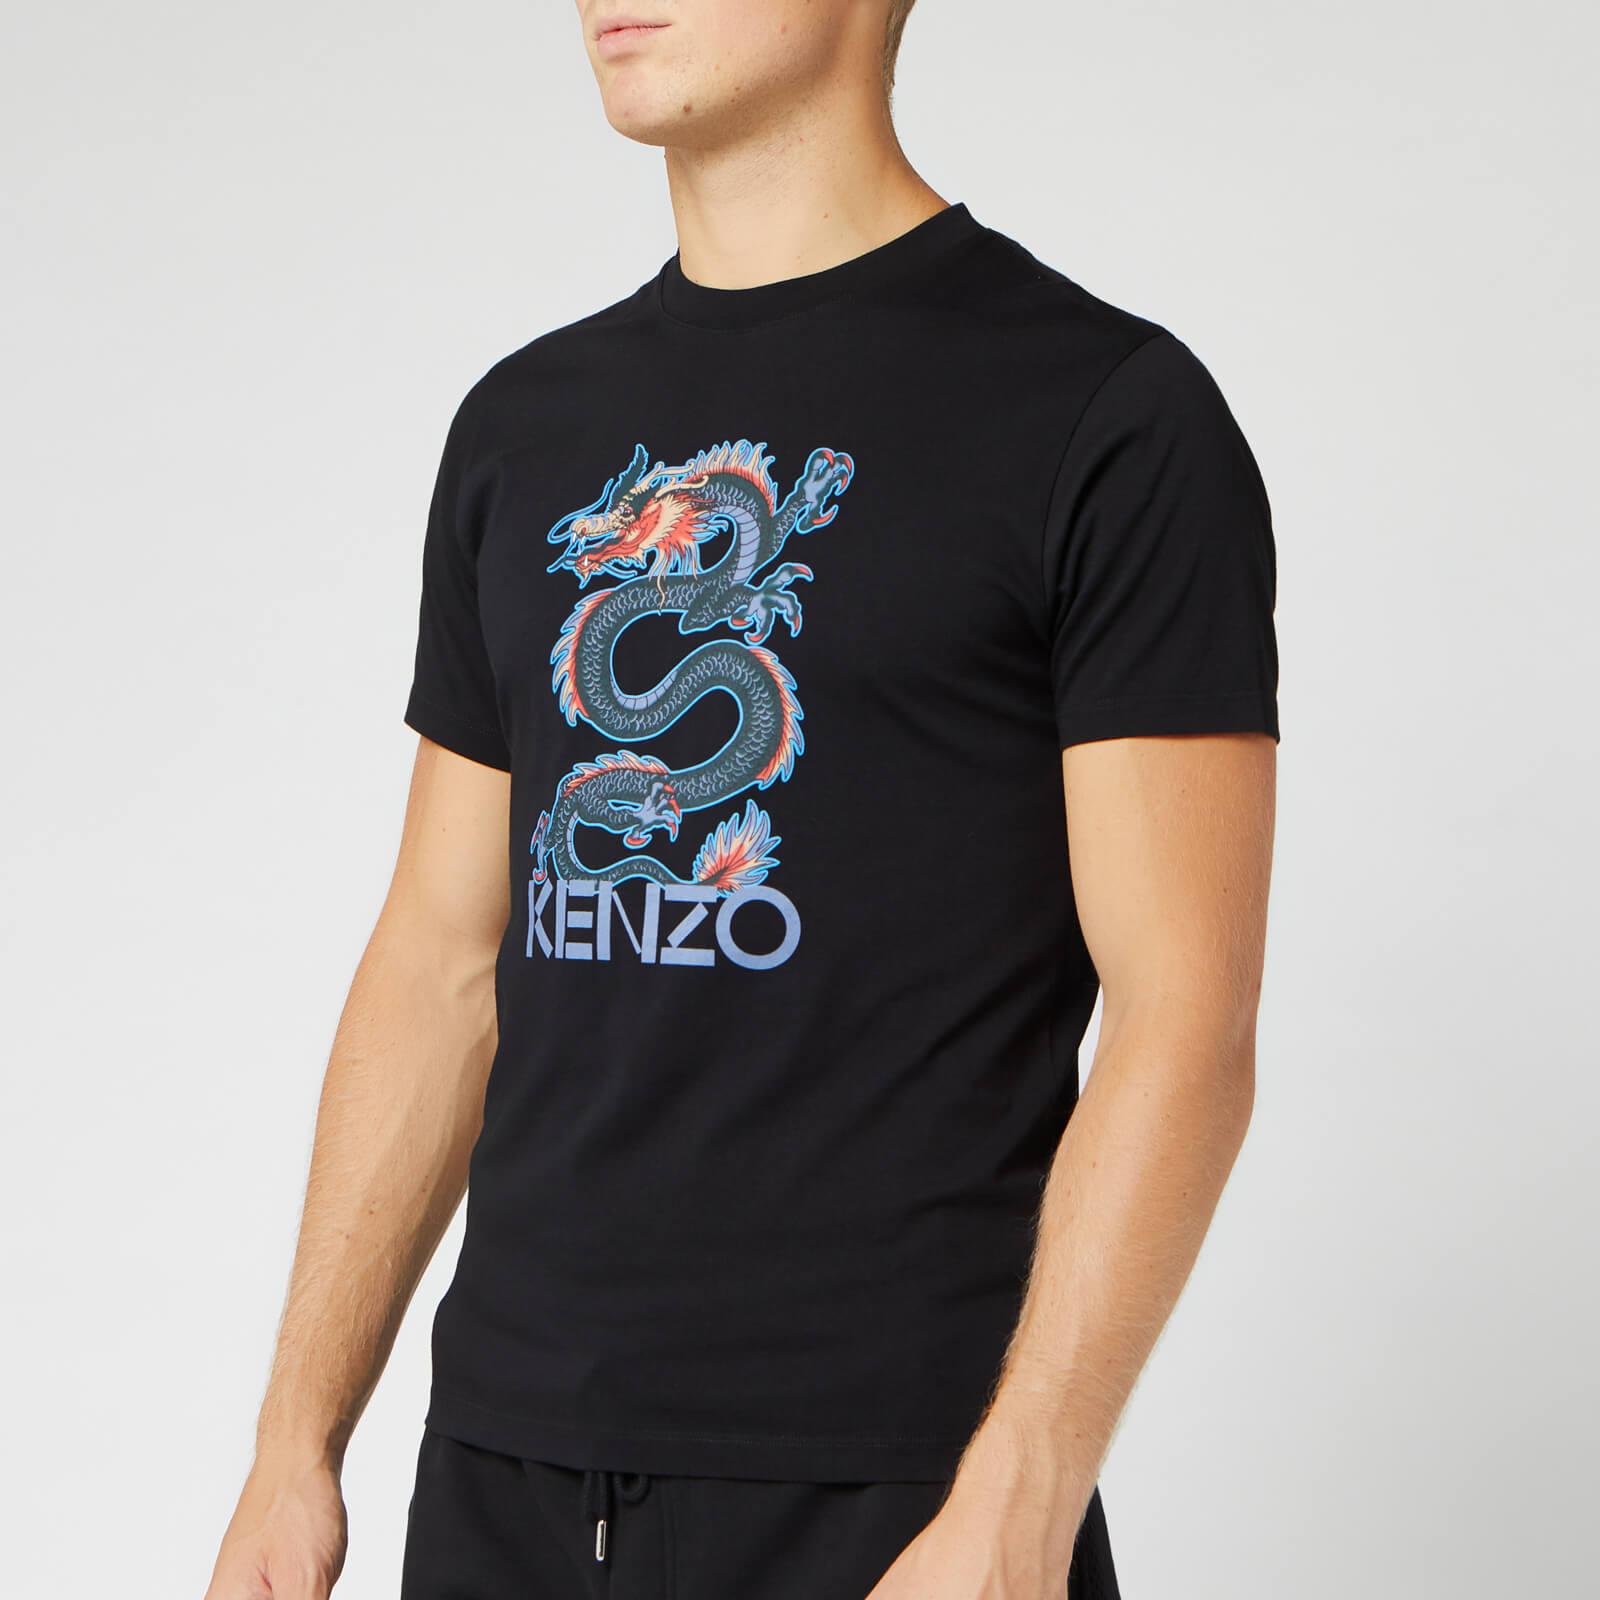 KENZO Dragon Slim T-shirt in Black for Men - Lyst